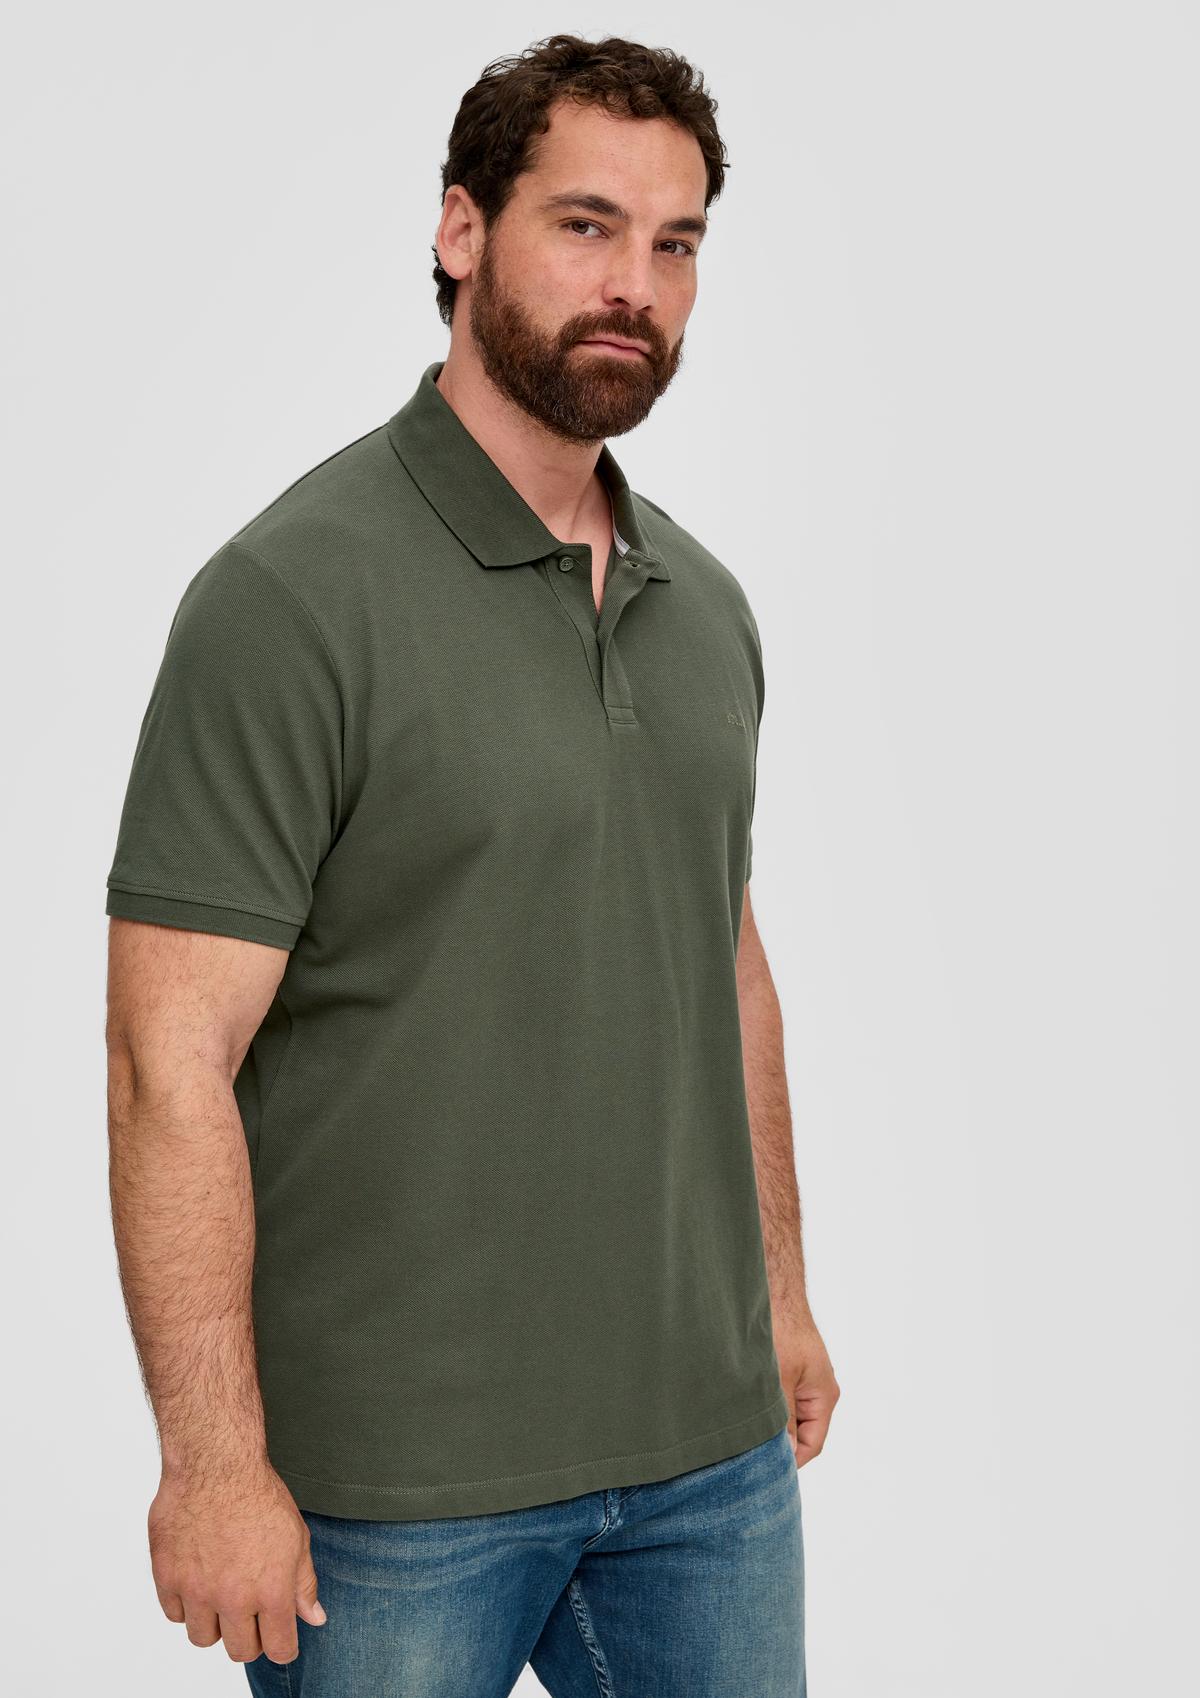 Polo shirt minimalist navy print a with -